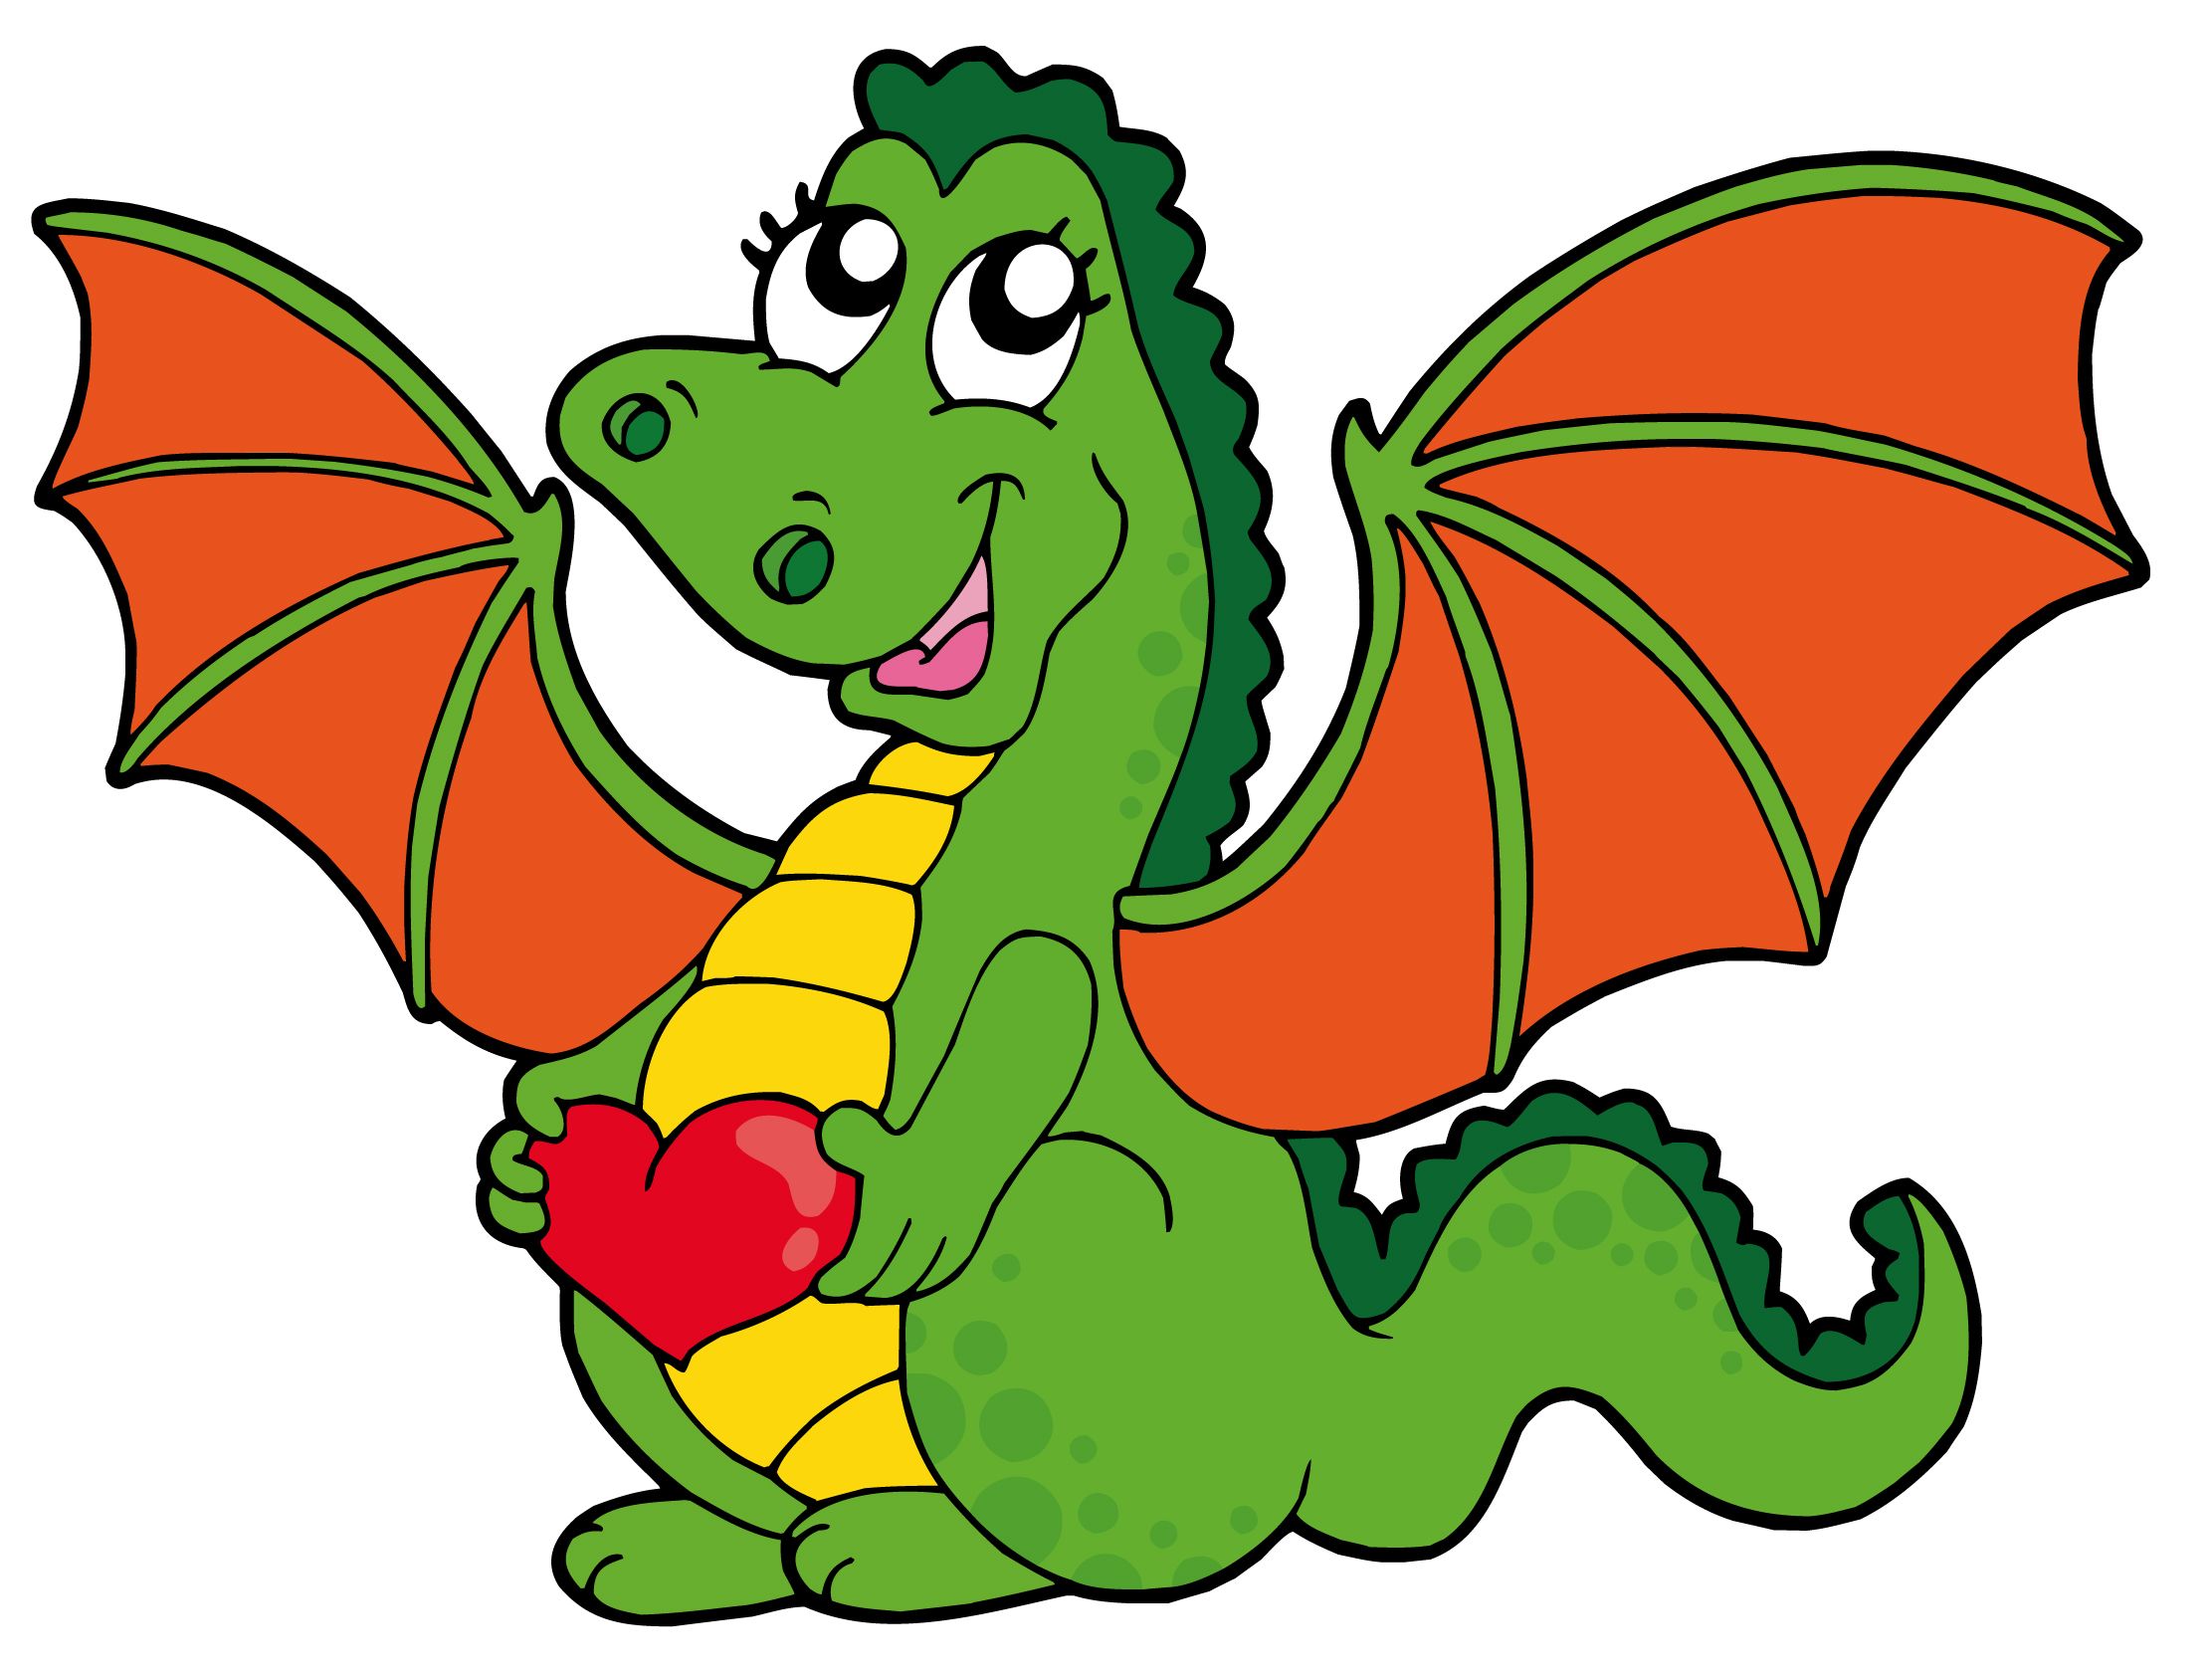 dragon clipart cartoon - Cerca amb Google | Drakar | Pinterest ...